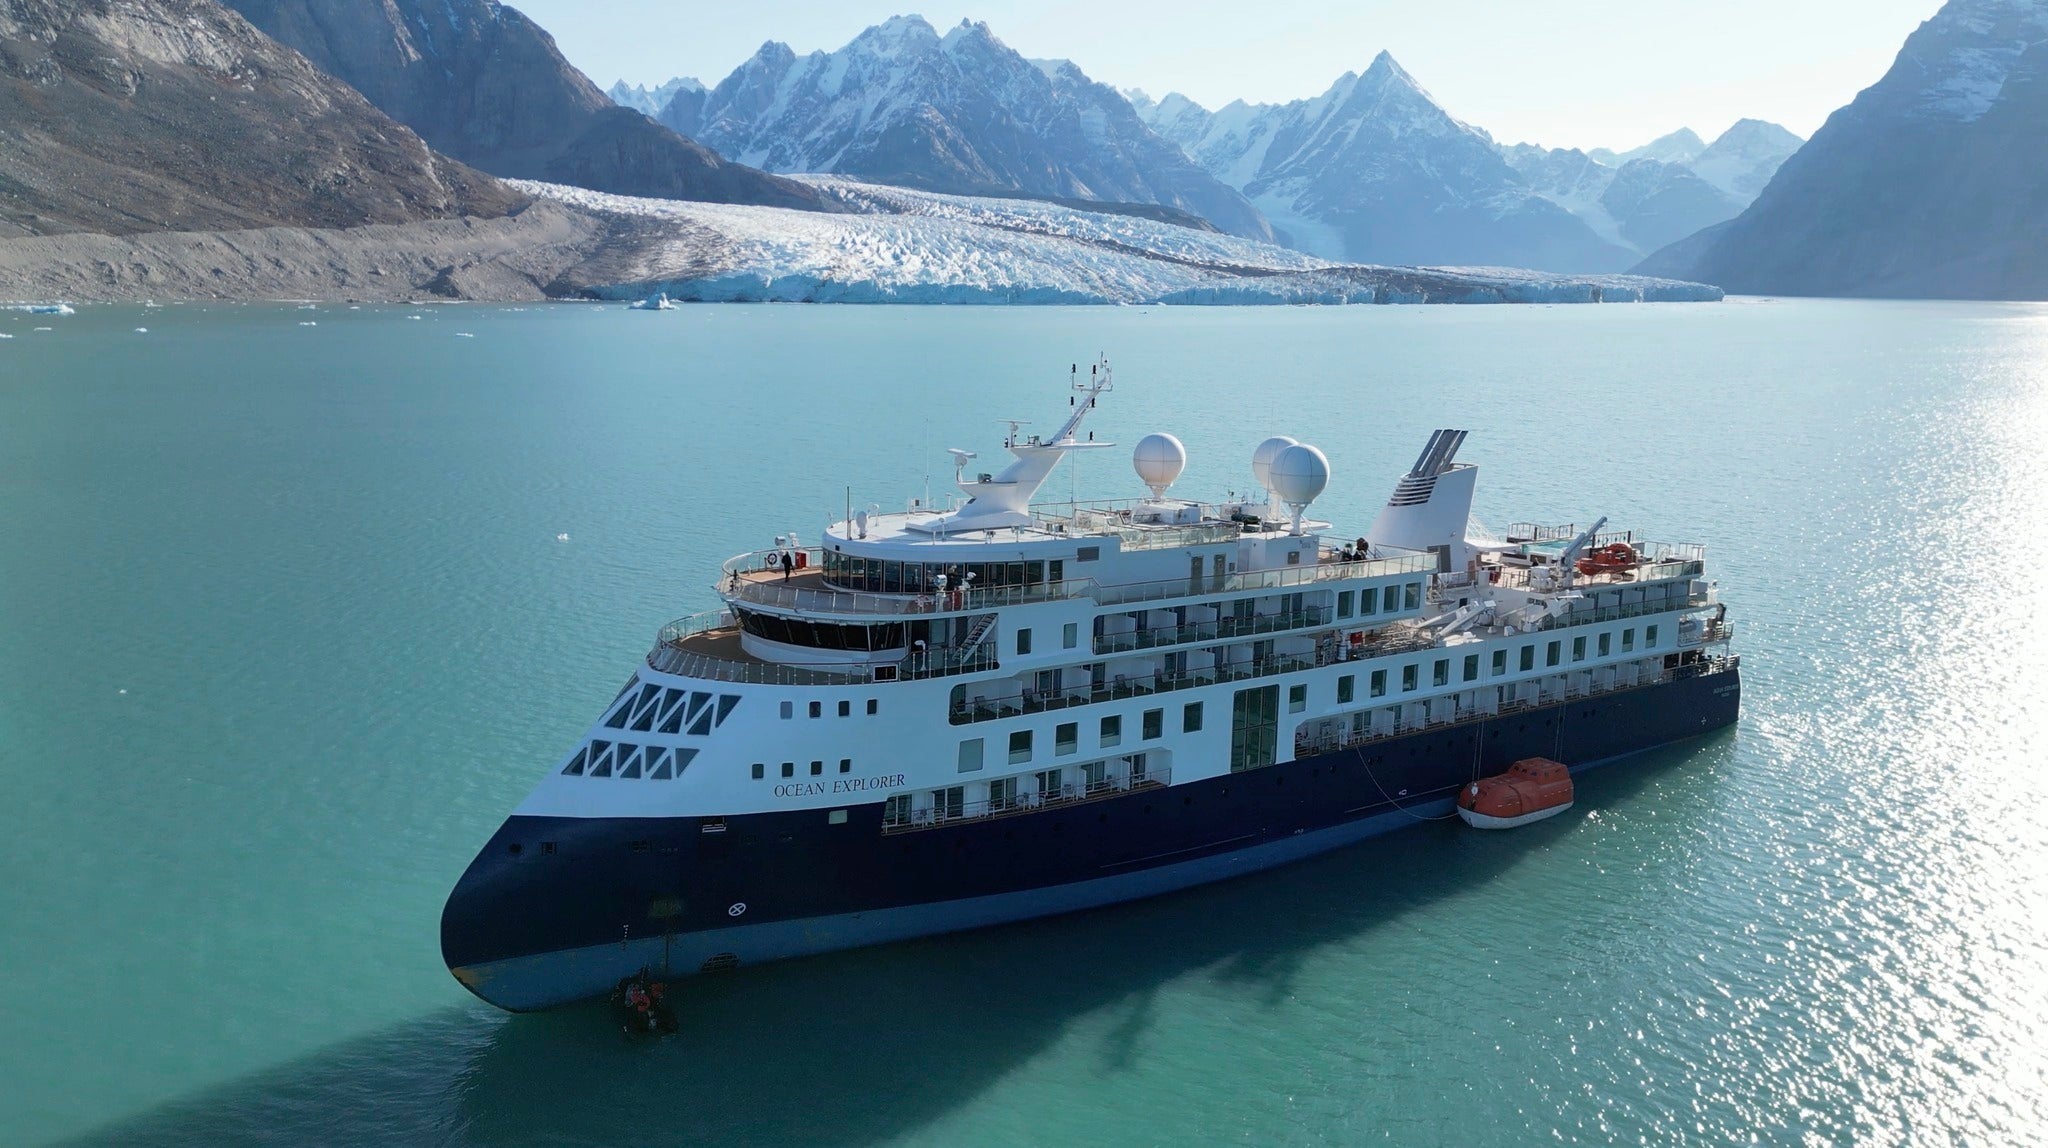 The Ocean Explorer vessel ran aground in Alpefjord